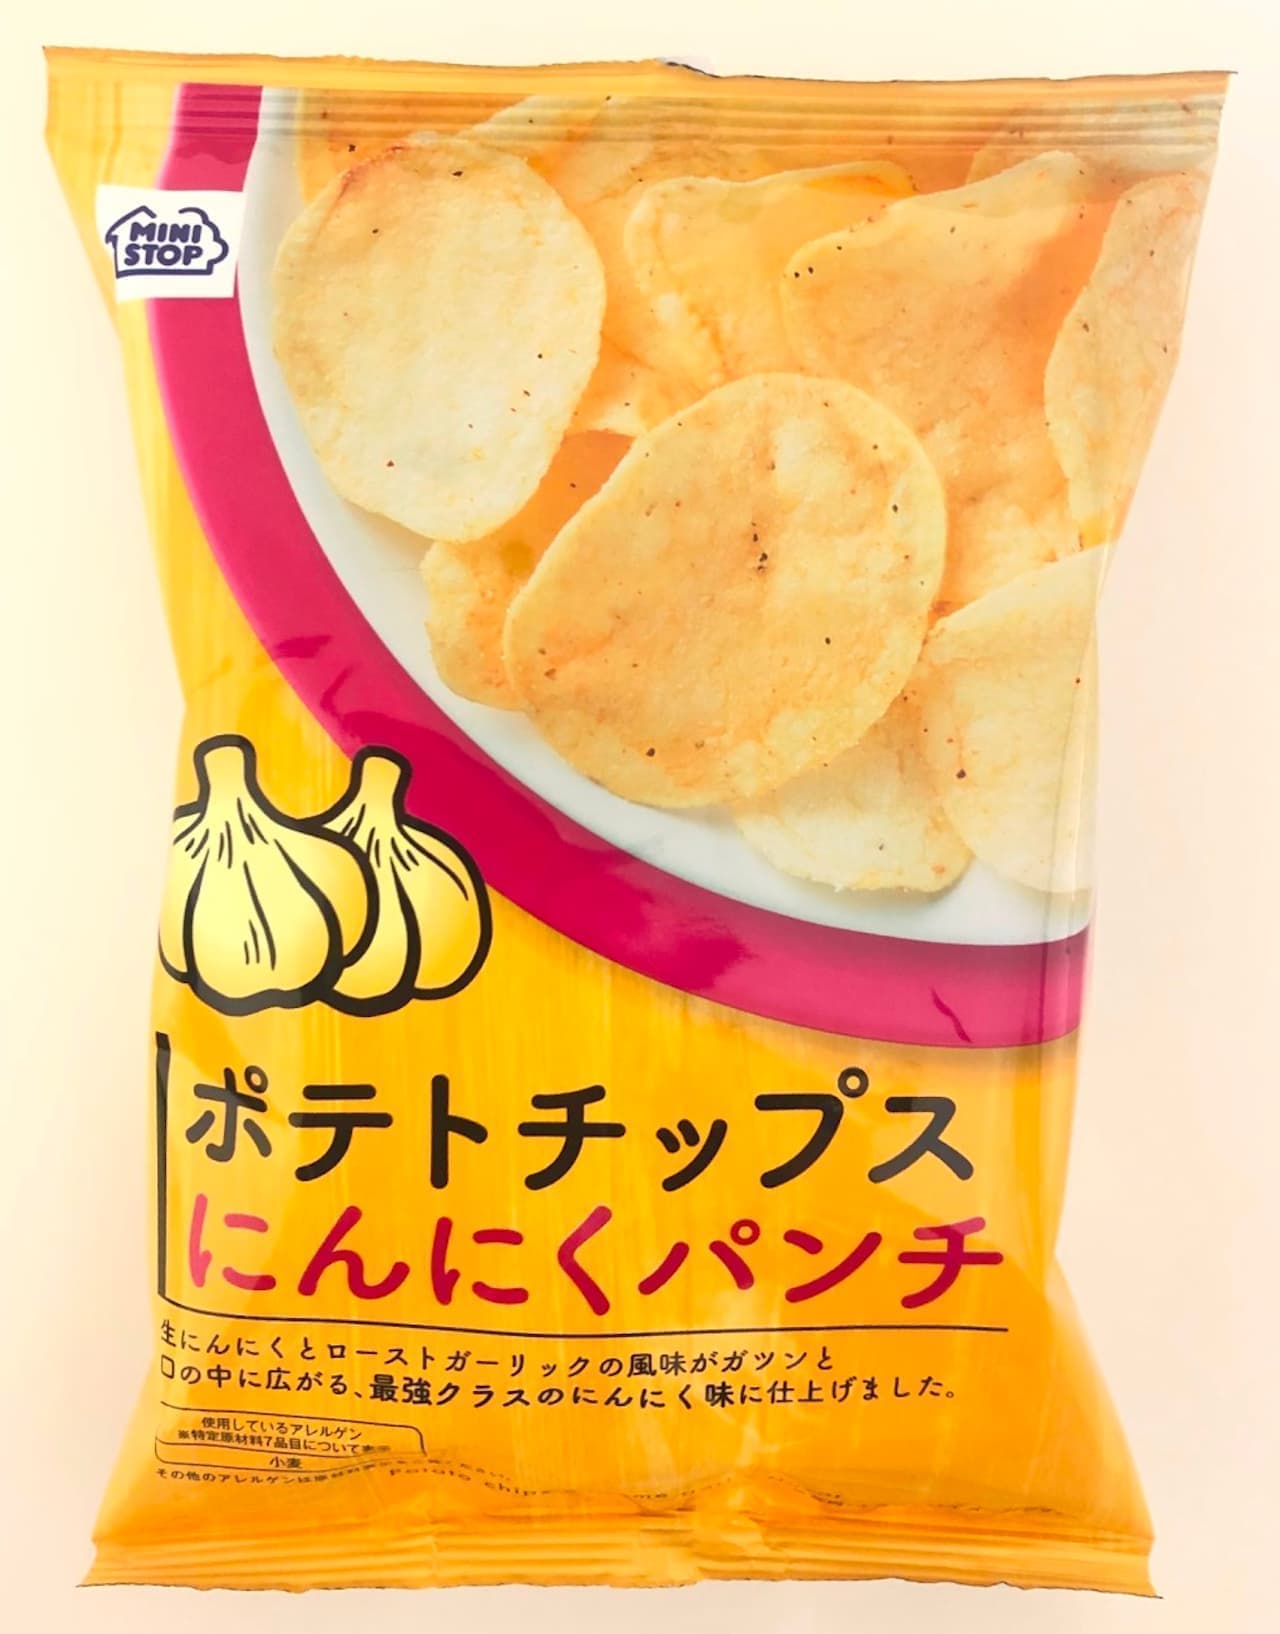 Ministop "Potato Chips Garlic Punch"